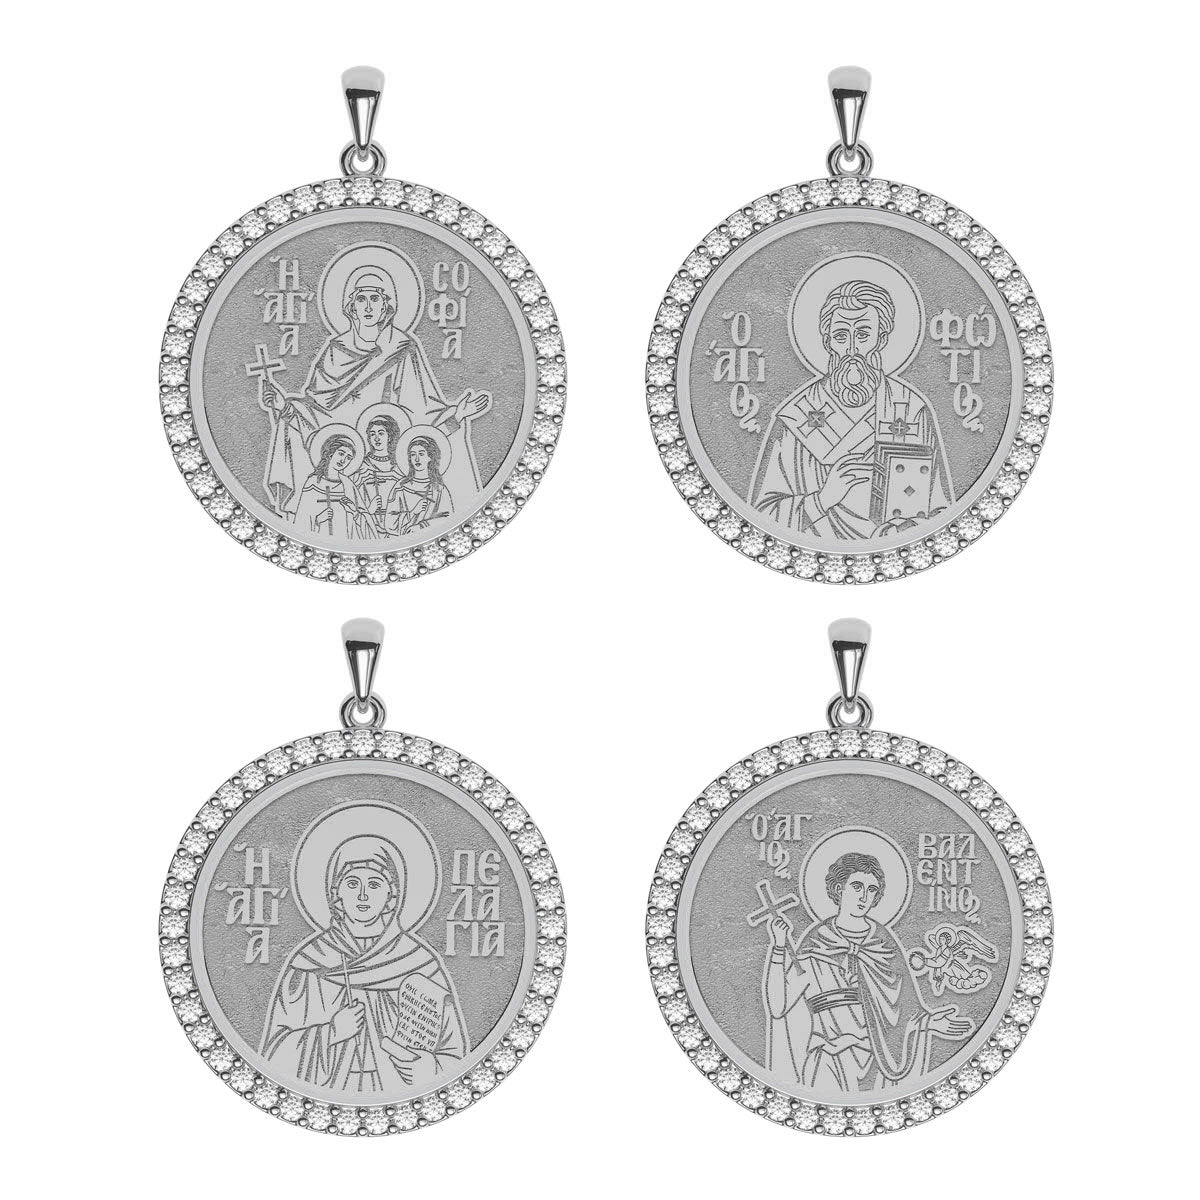 Create Your Saint - Custom Greek Orthodox Icon Pavé Round Medal